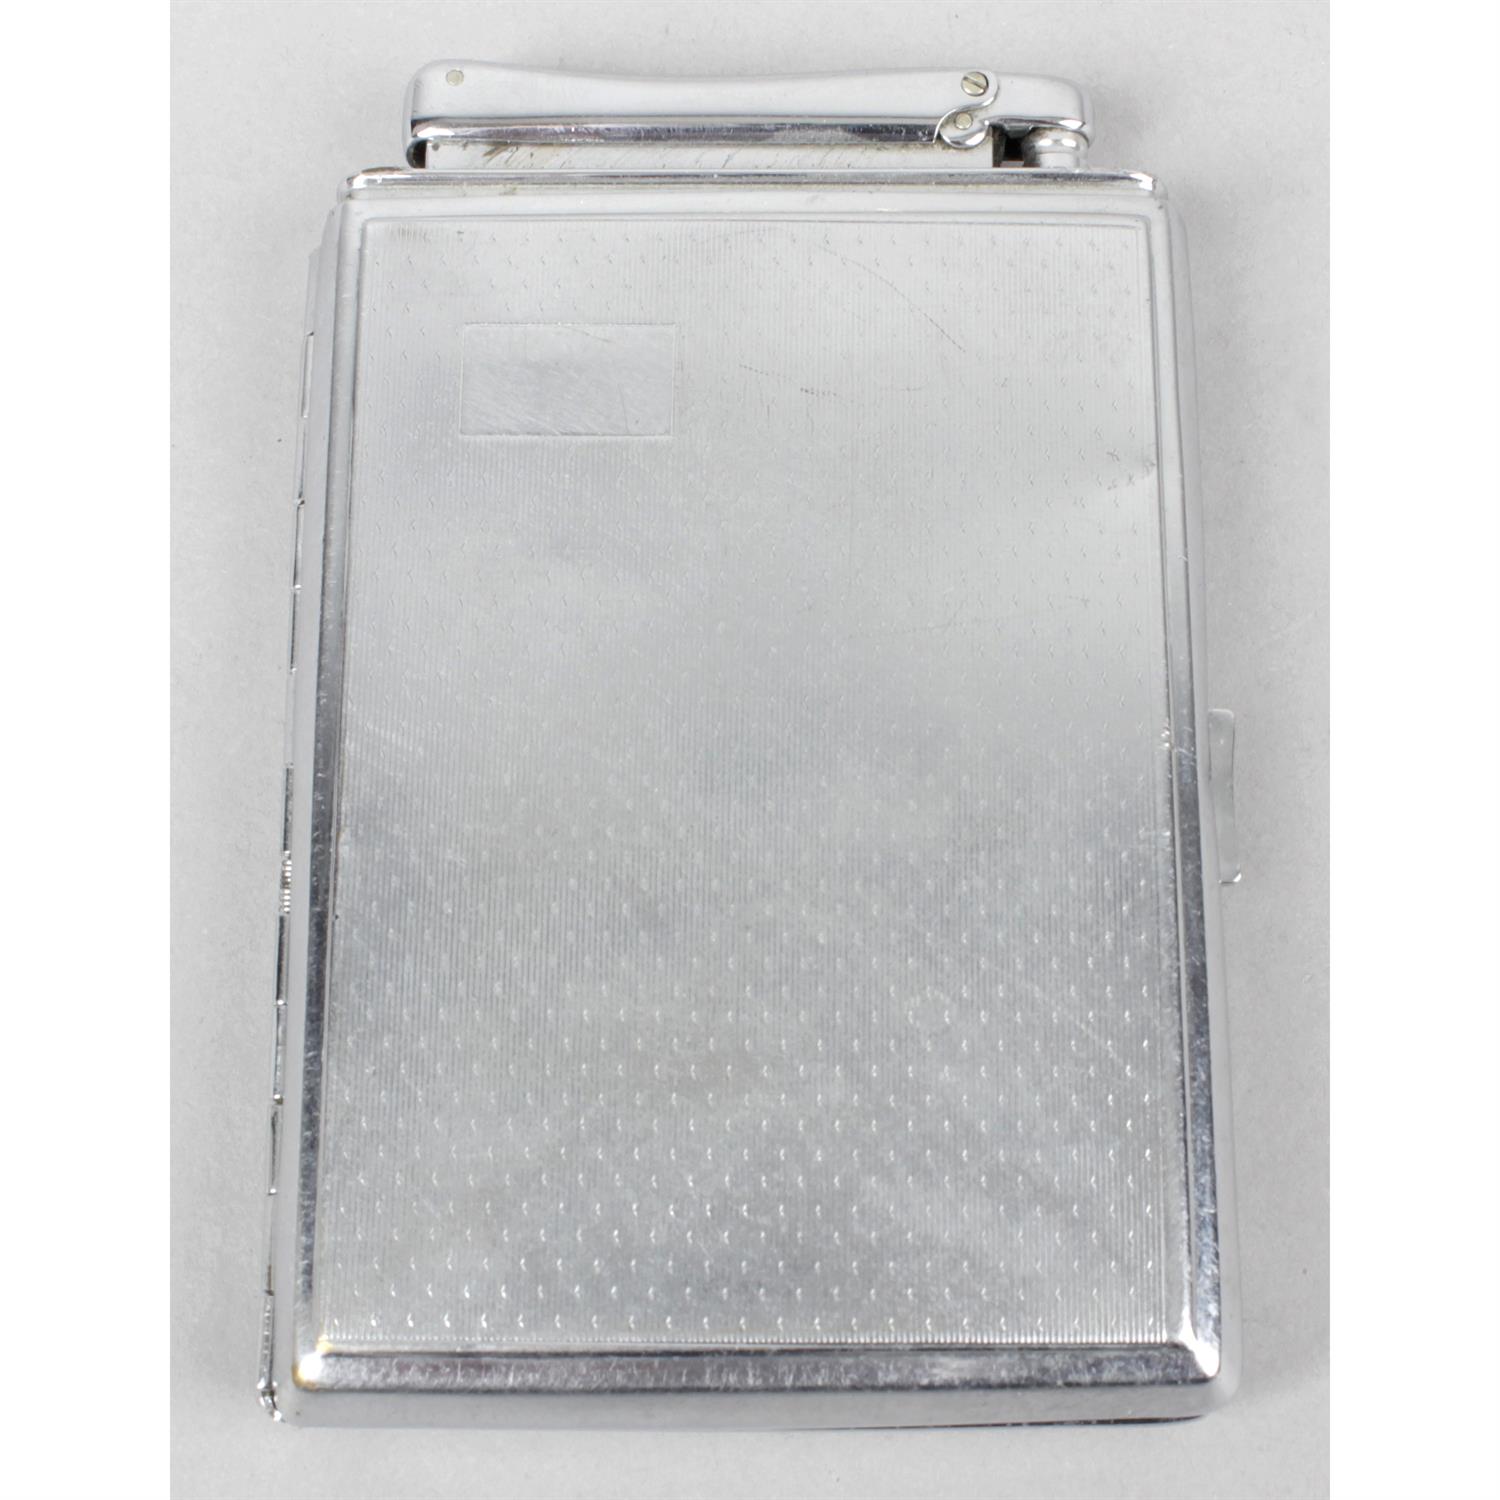 A Colibri metal cigarette case with incorporated lighter.